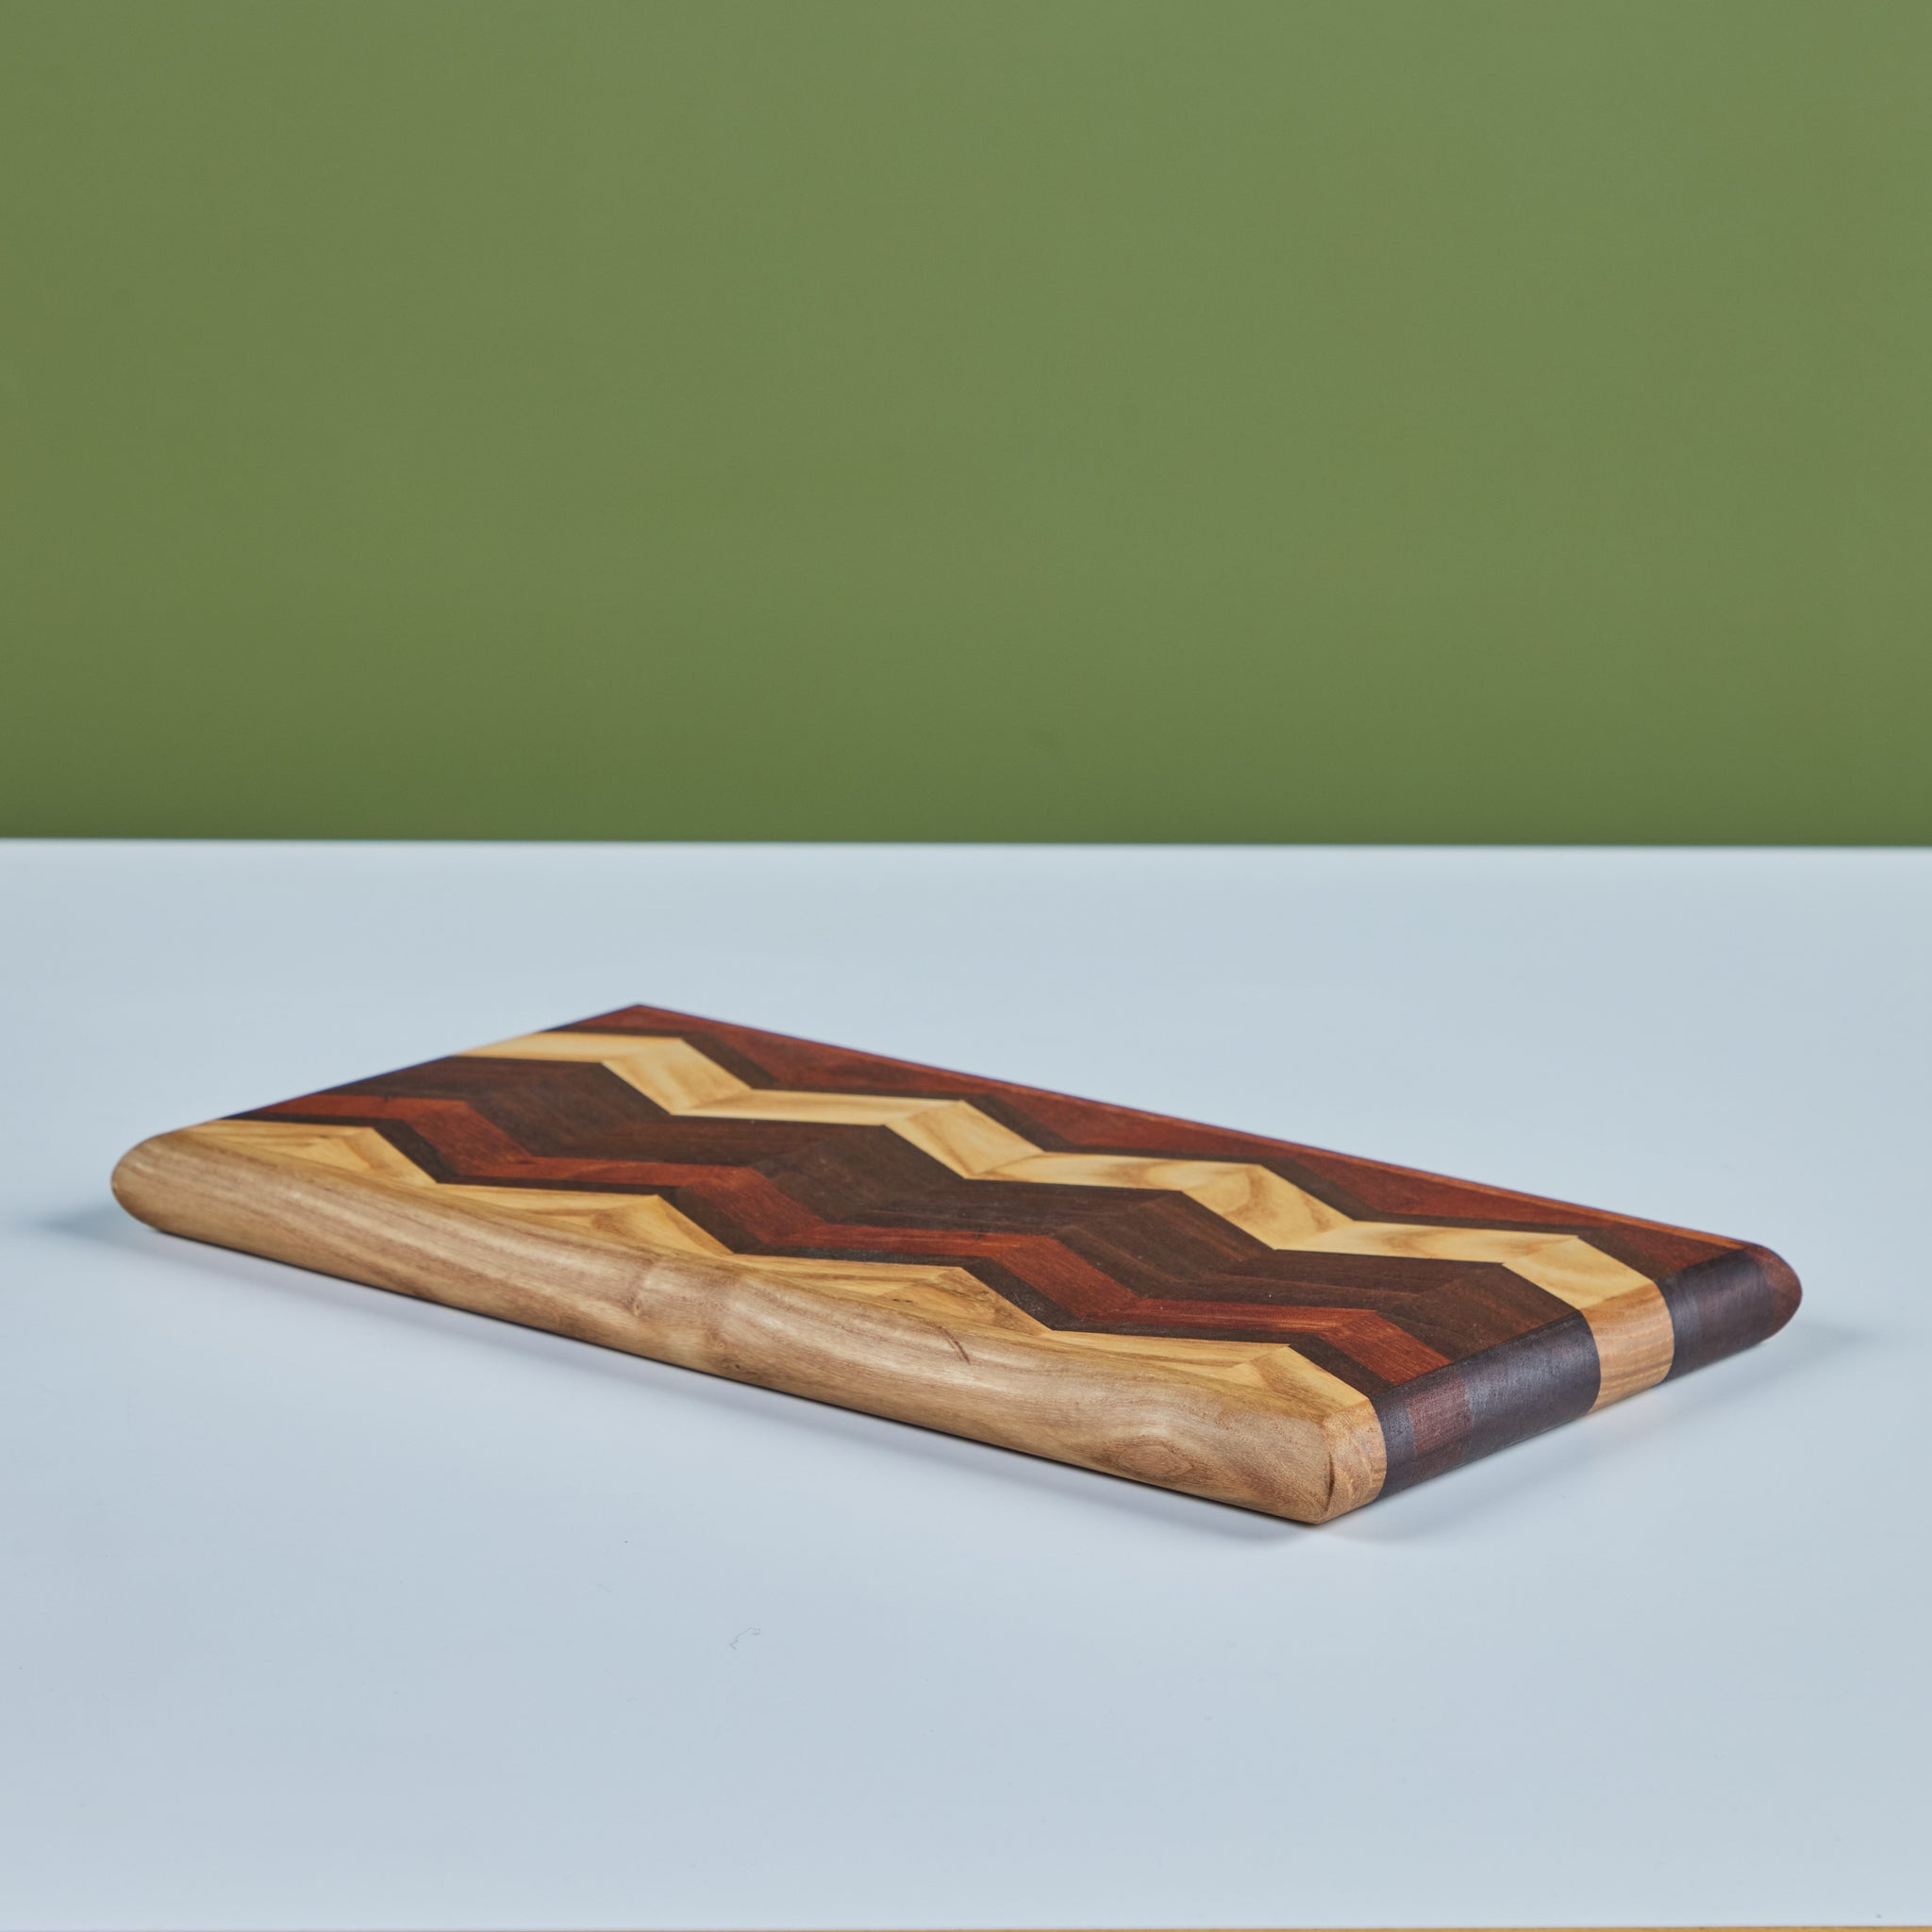 Don Shoemaker Wood Inlaid Chevron Pattern Cutting Board for Señal